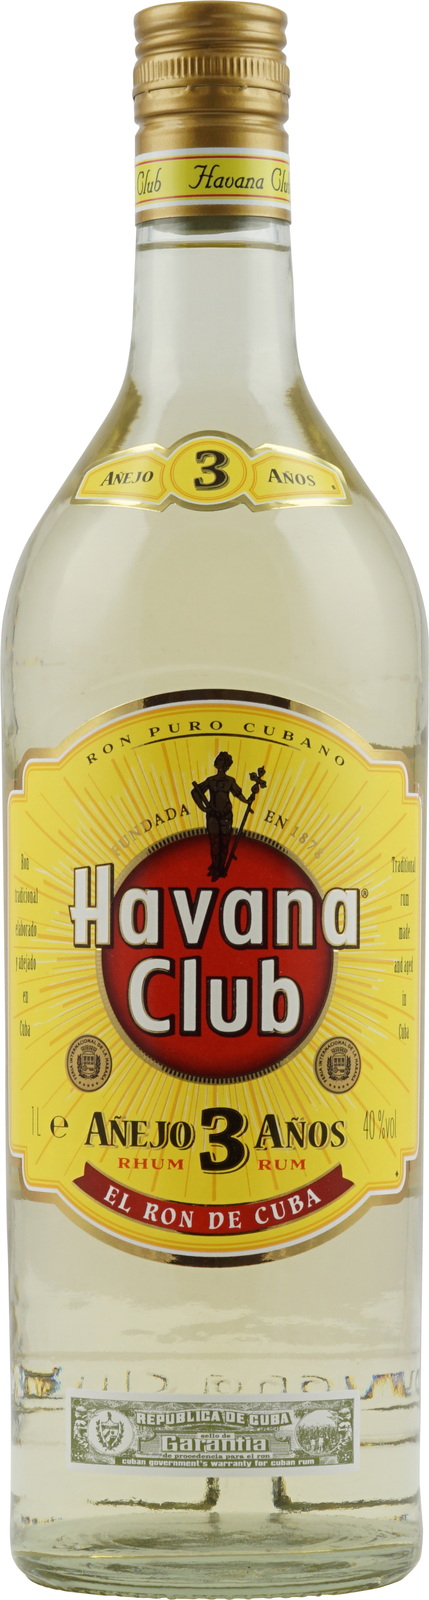 Havana 40% 1 Añejo Vol. hier Jahre) Liter Rum i (3 Club